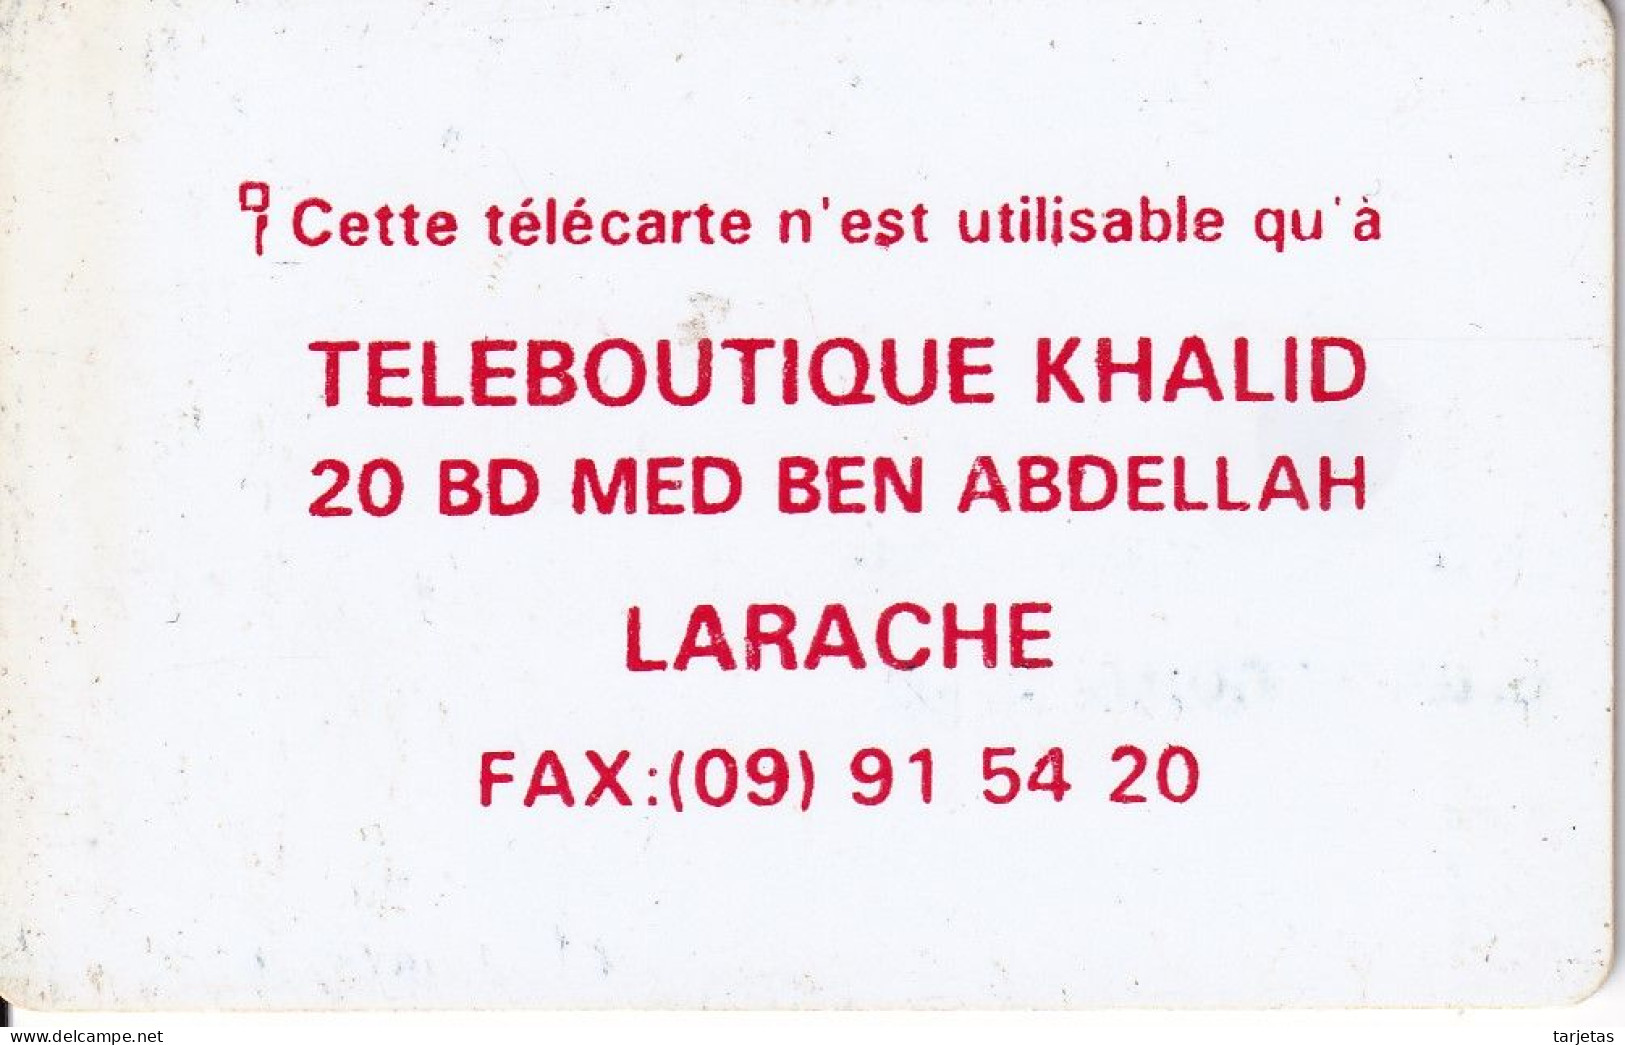 TARJETA DE MARRUECOS DE ALFATEL DE 100 UNITES CON PUBLICIDAD TELEBOUTIQUE KHALID EN LARACHE - Maroc